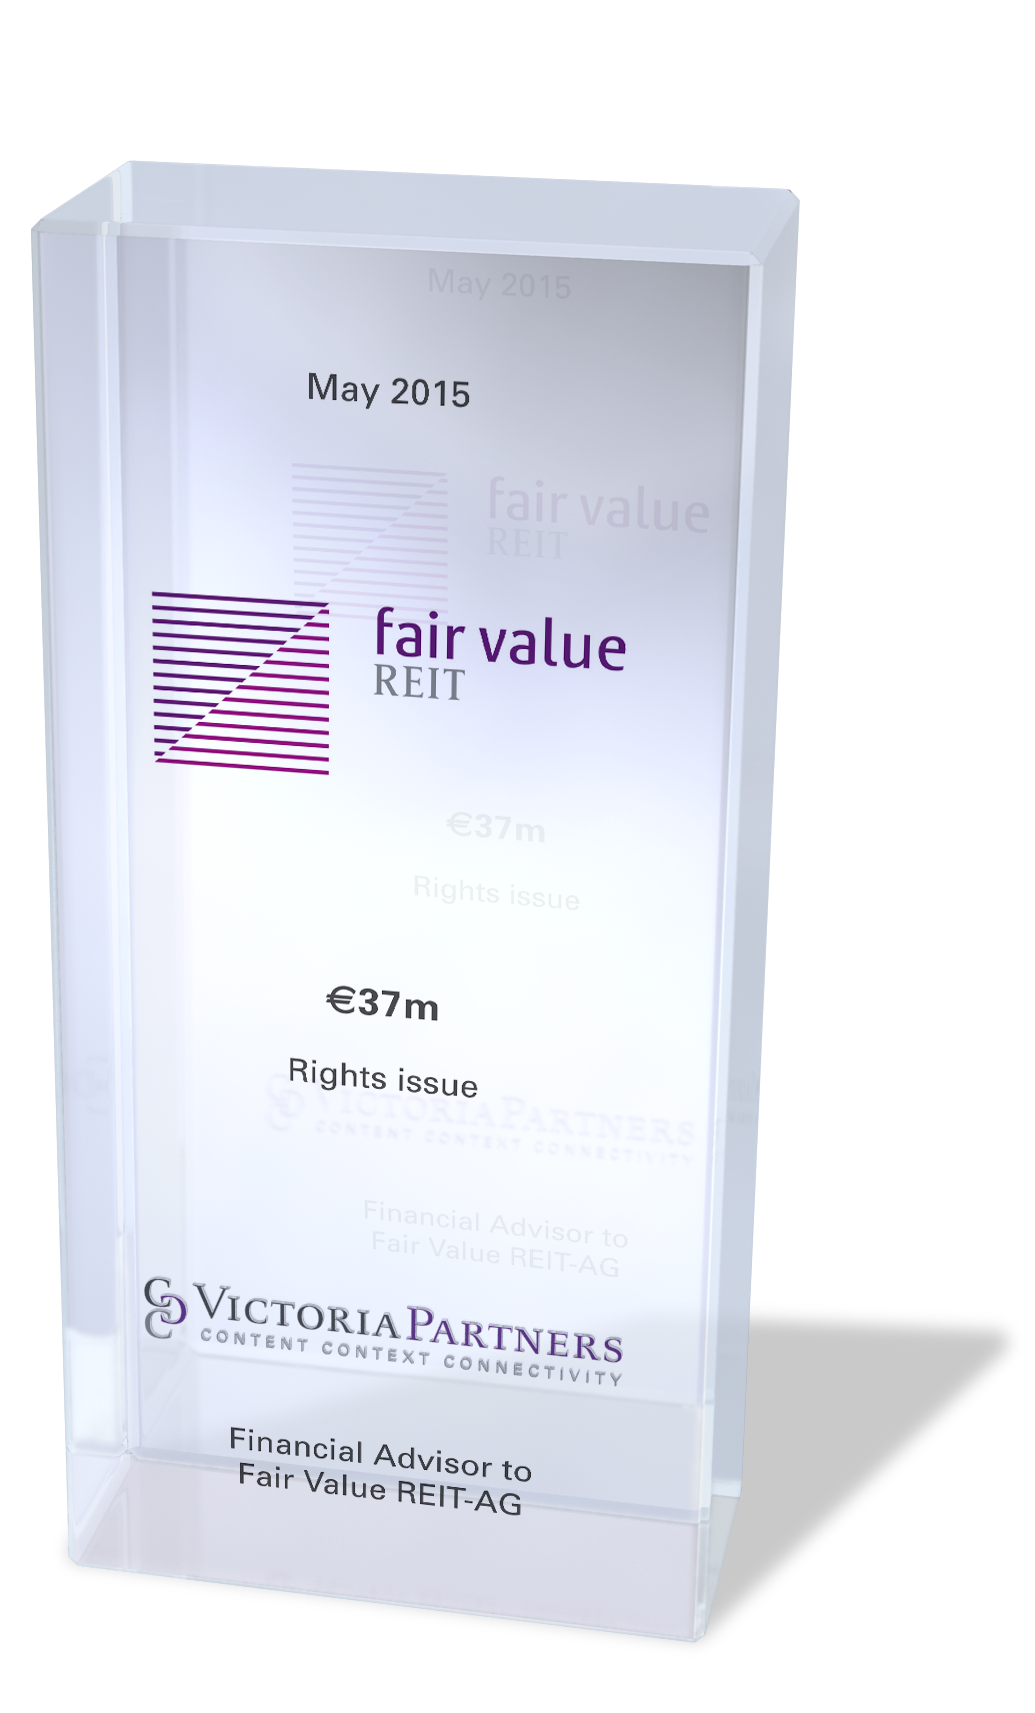 VICTORIAPARTNERS - Financial Advisor to Fair Value REIT-AG - May 2015